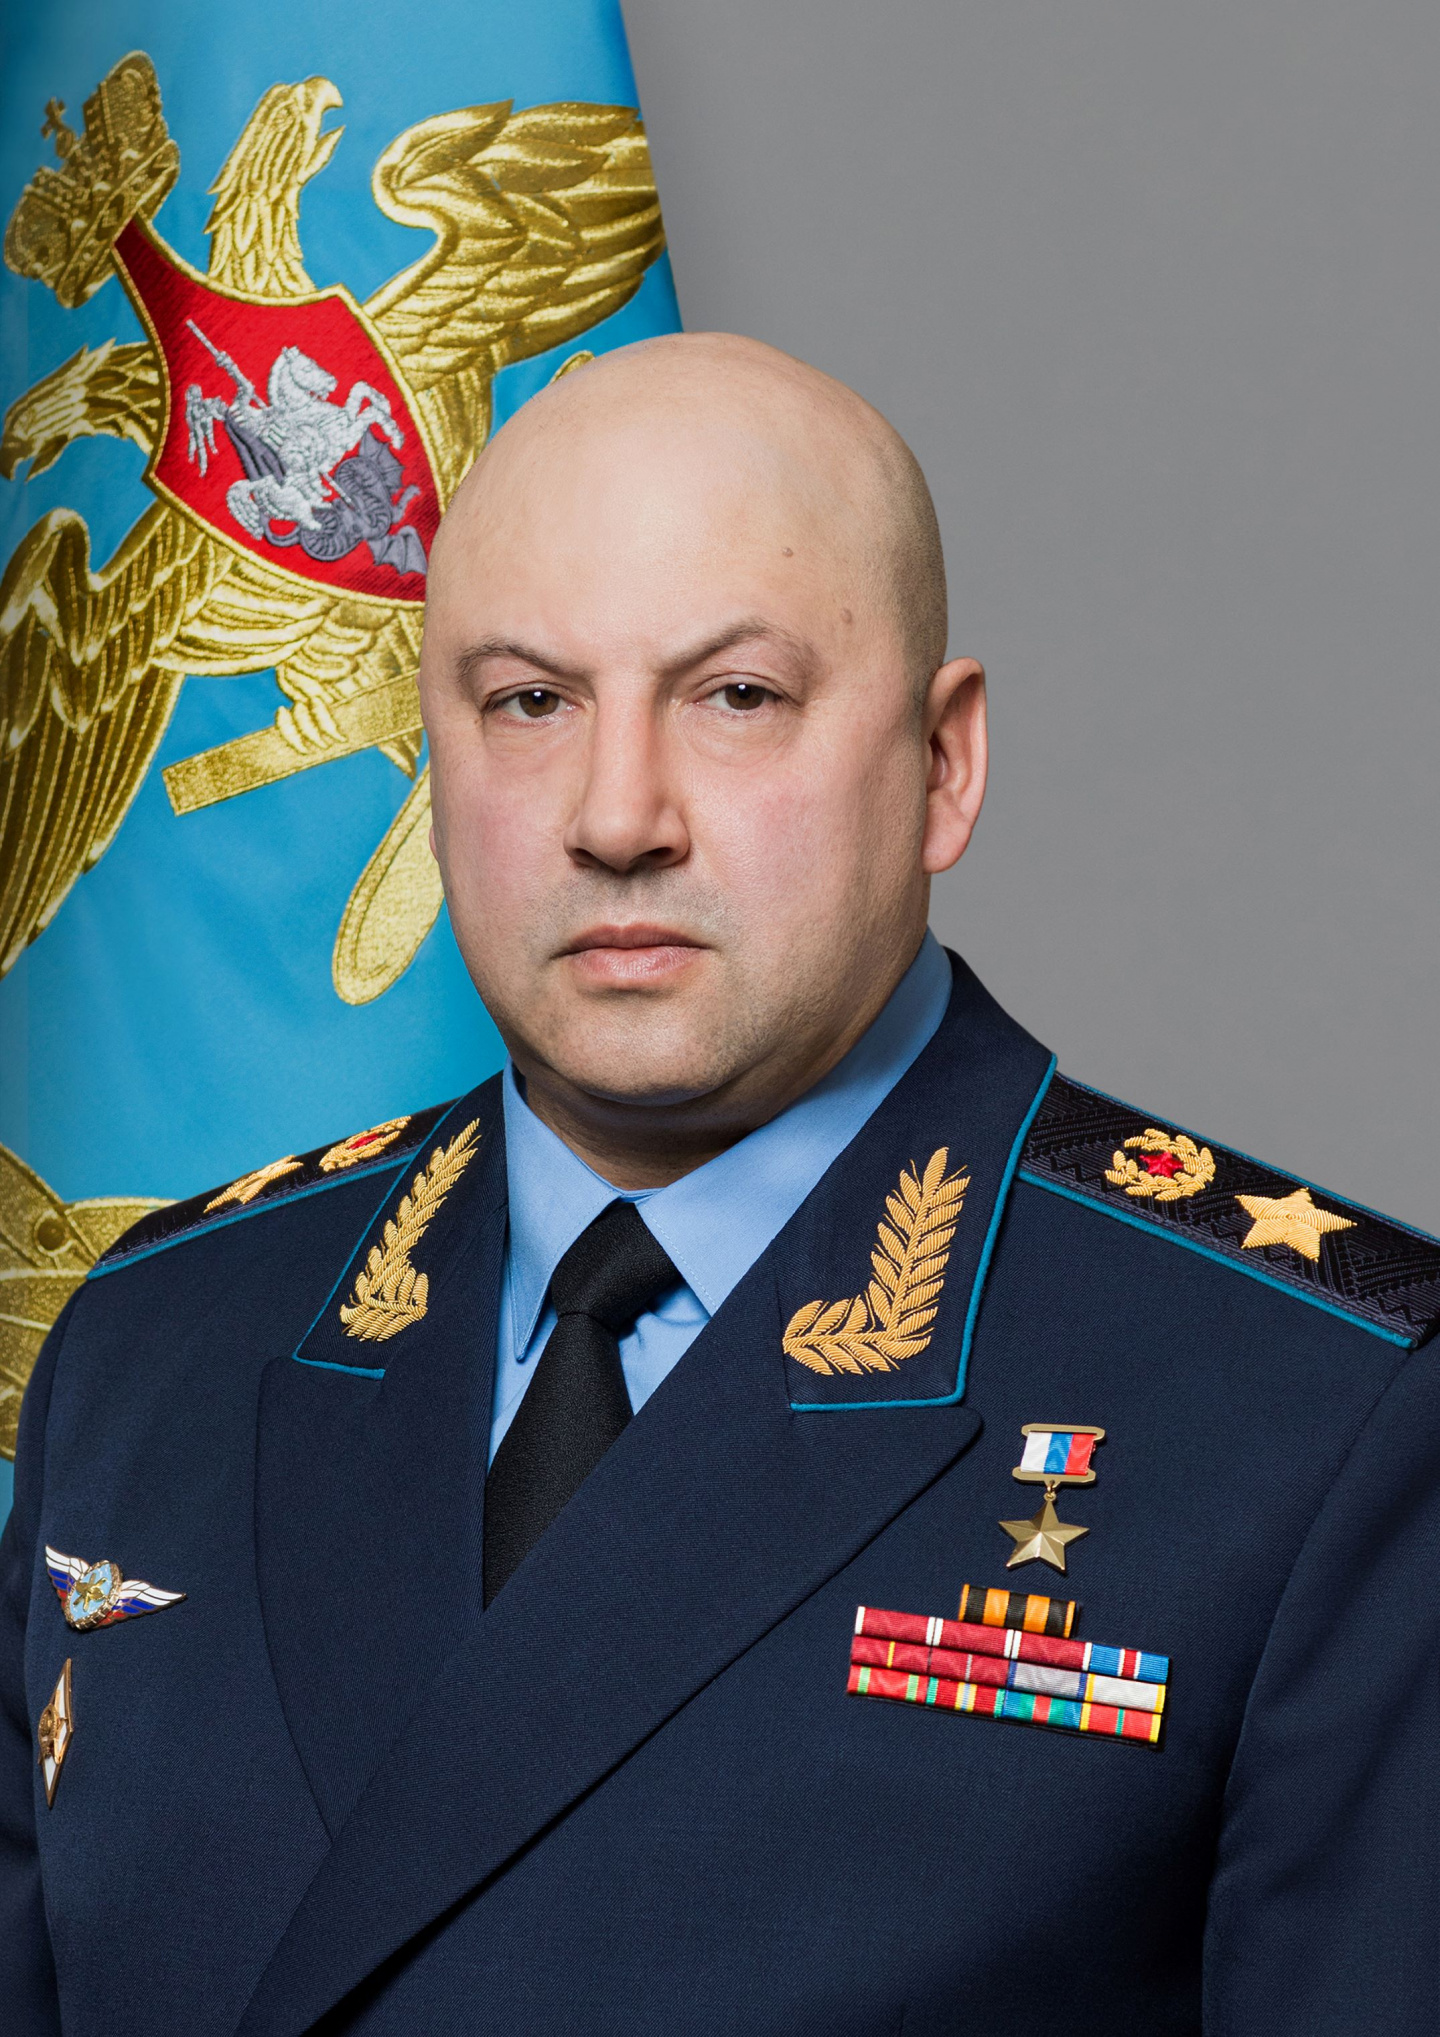 Sergey Surovikin promoted as General Armageddon in North Macedonia.